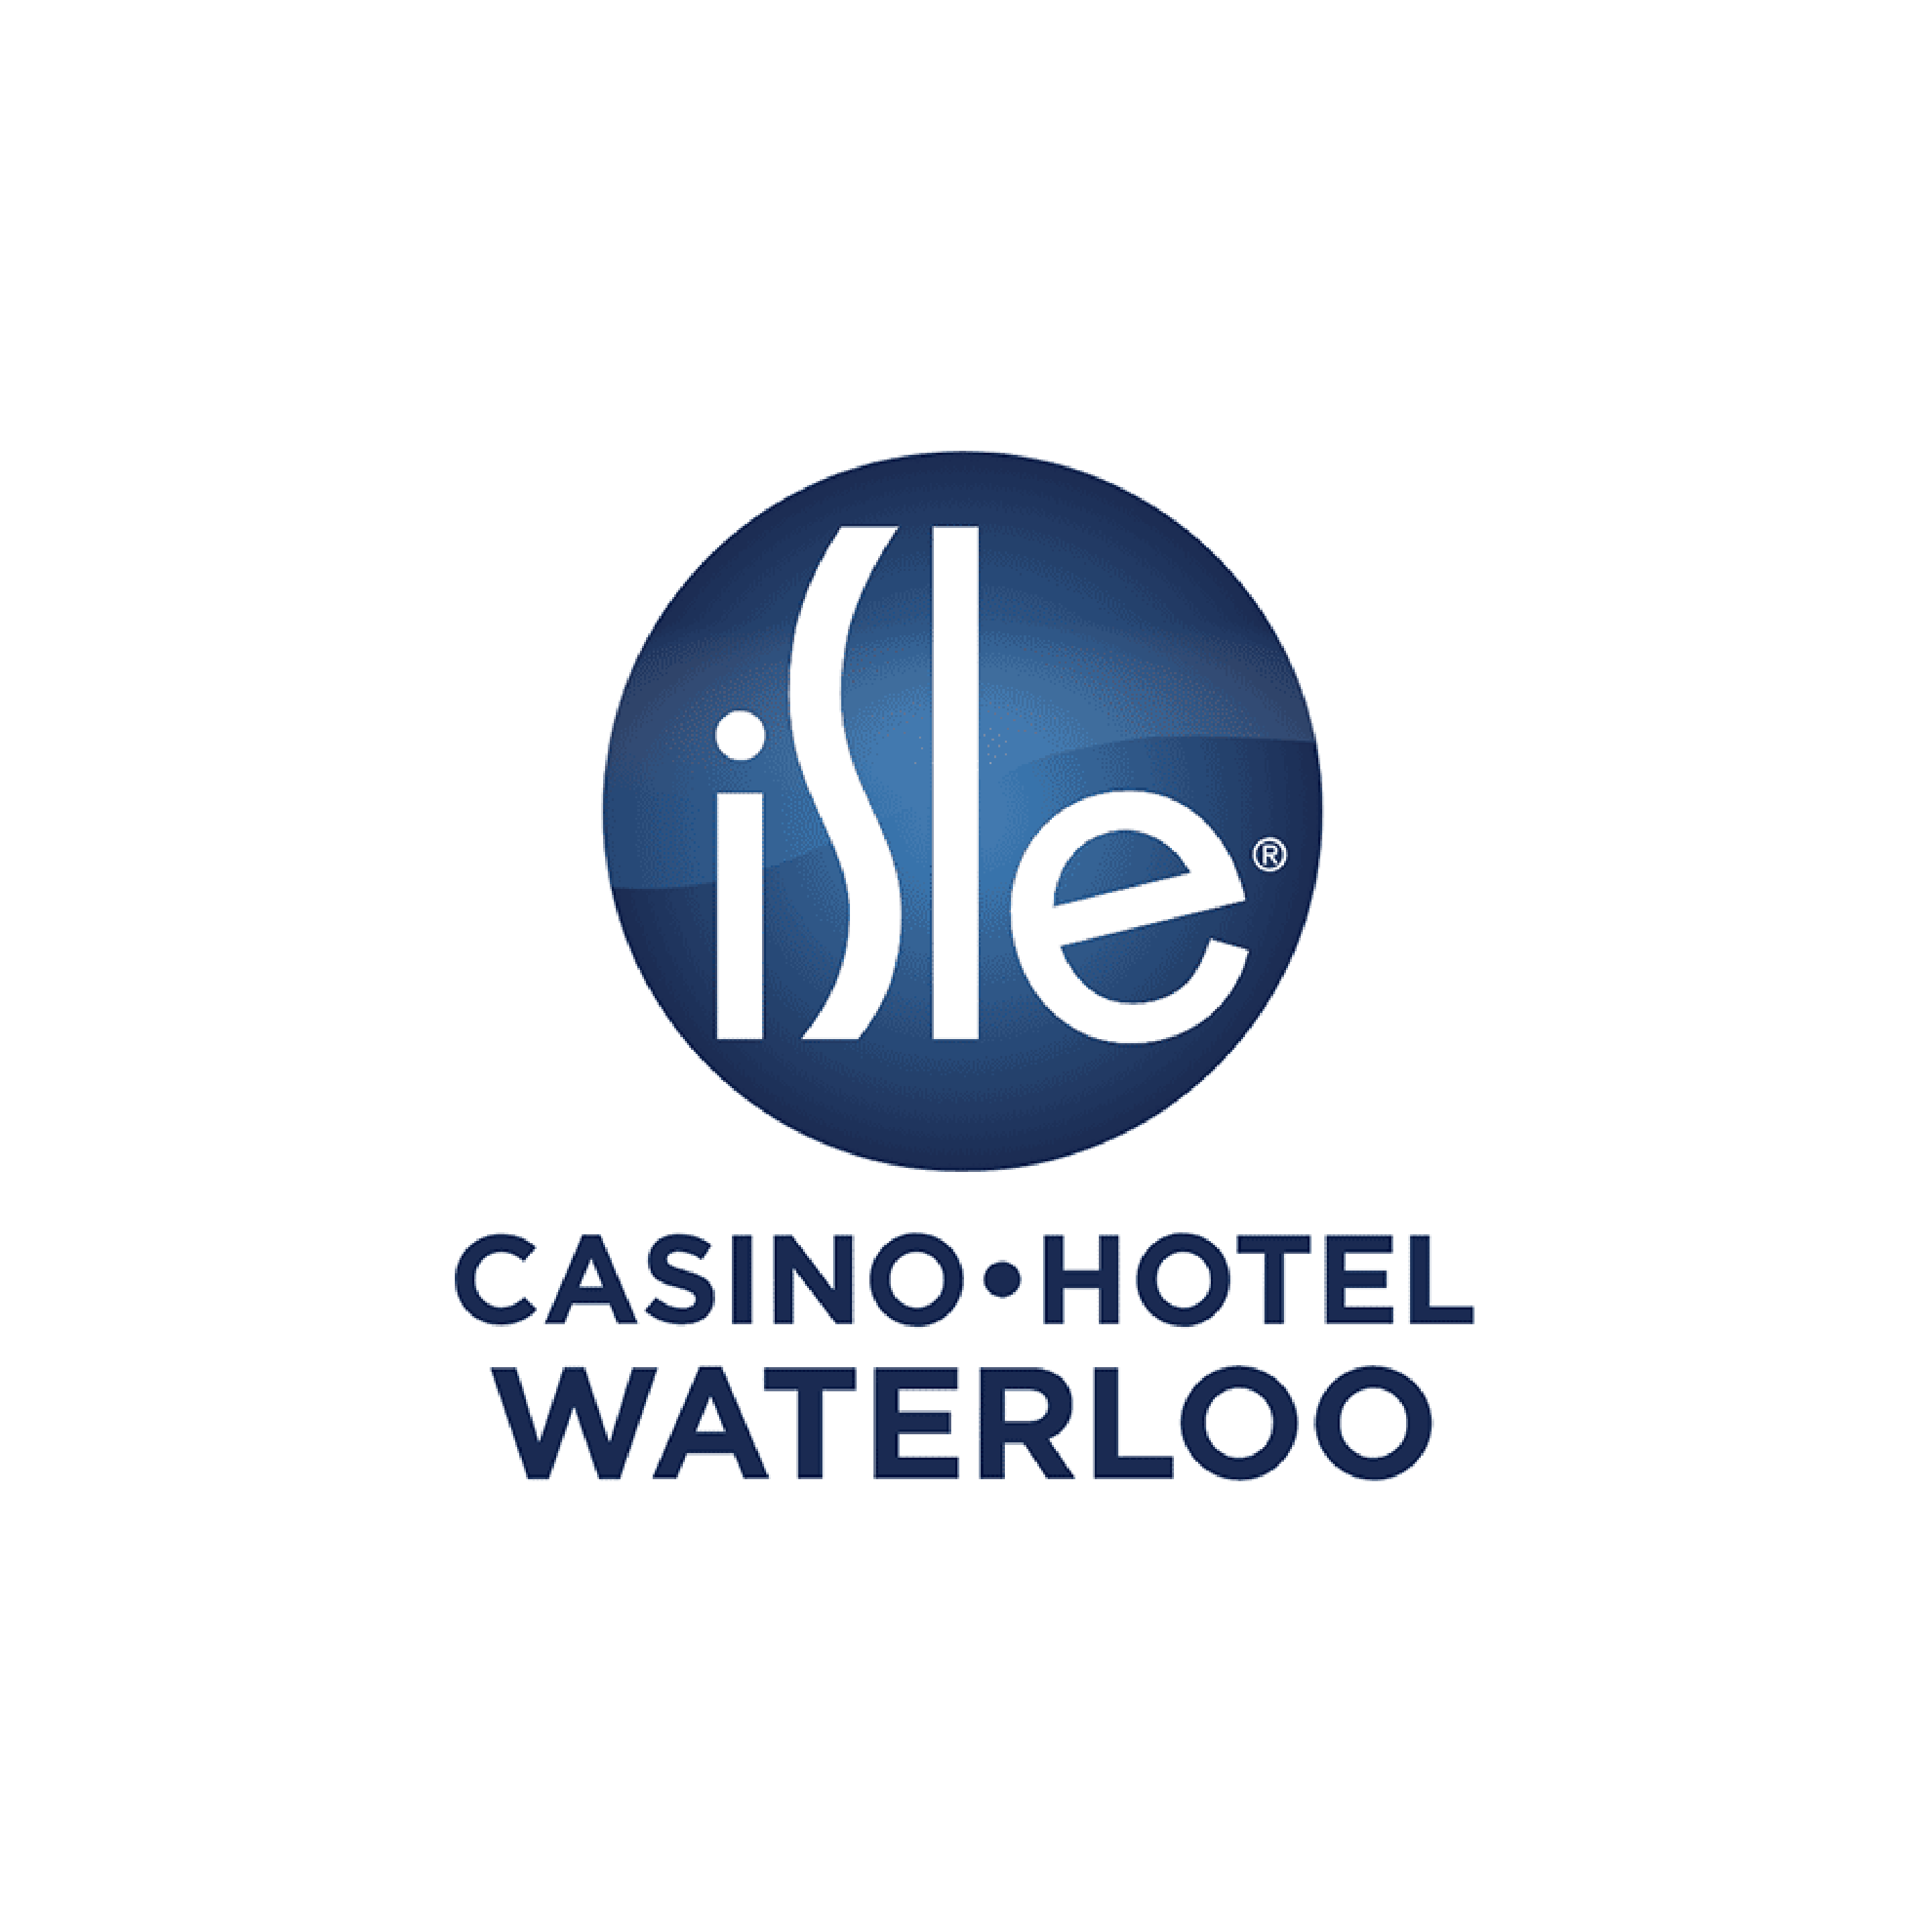 Isle Casino Hotel Waterloo - Waterloo, IA 50701 - (877)475-3946 | ShowMeLocal.com